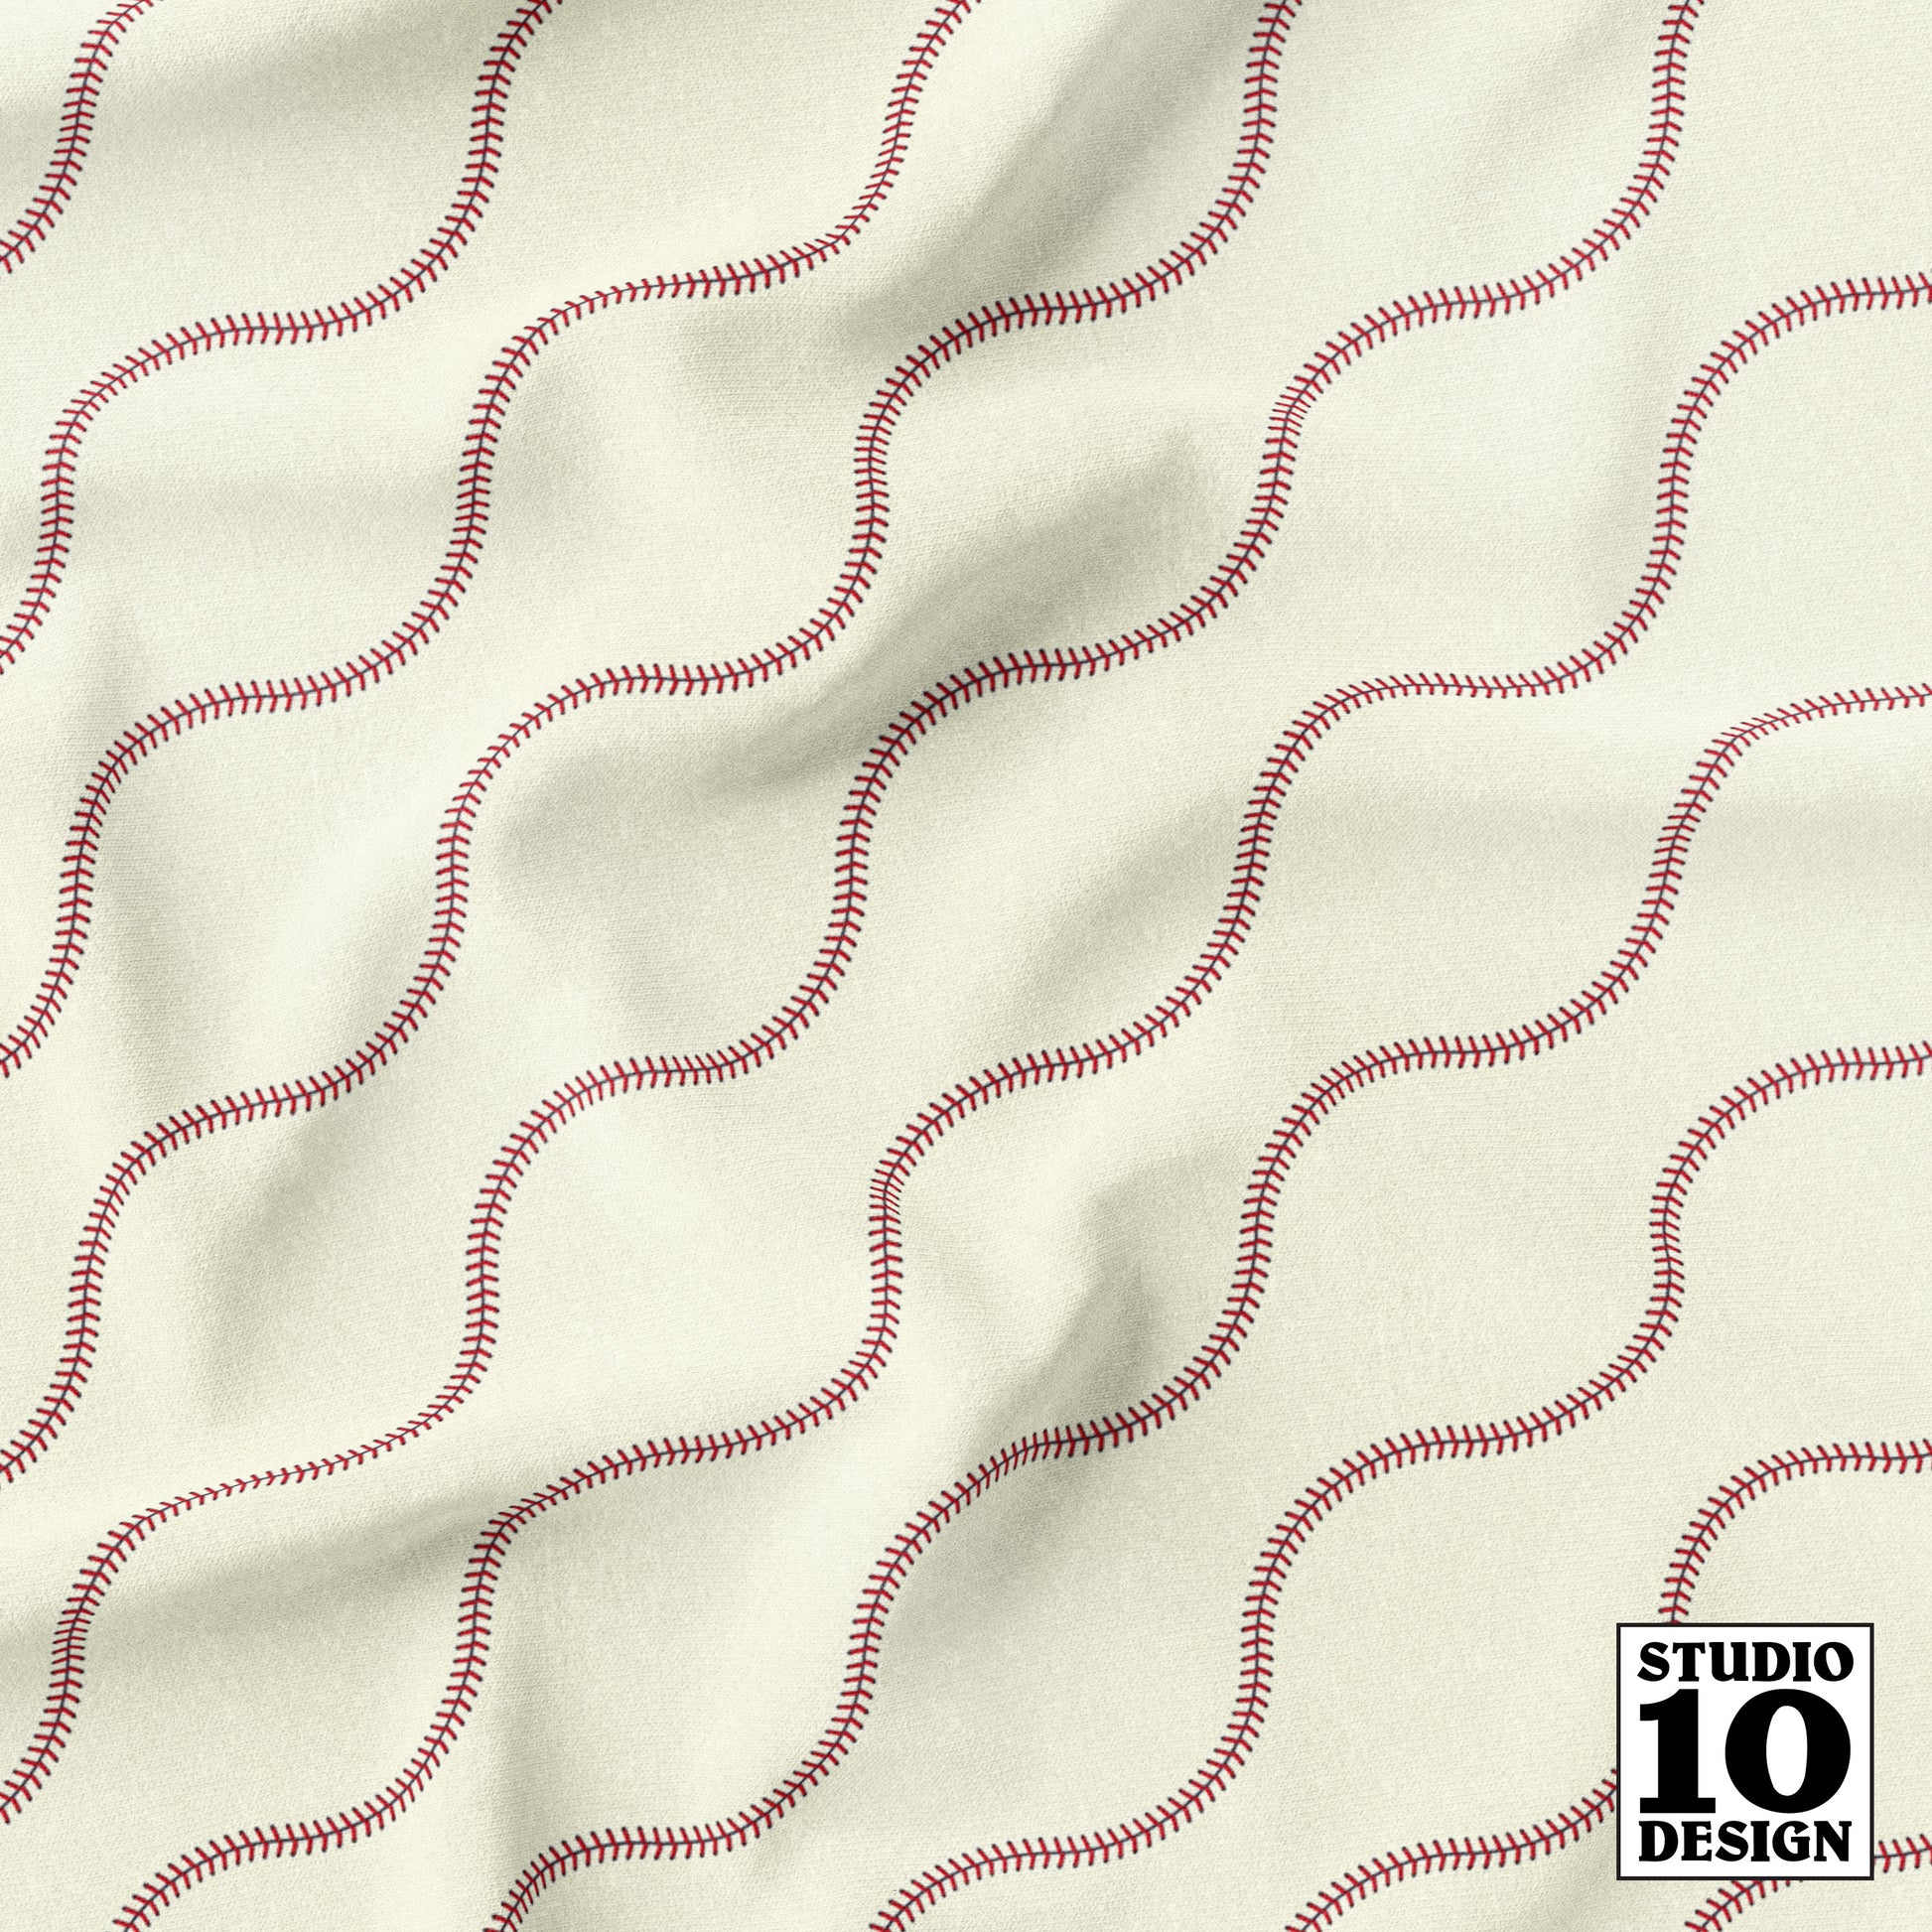 Americana Baseball Stitches Printed Fabric by Studio Ten Design